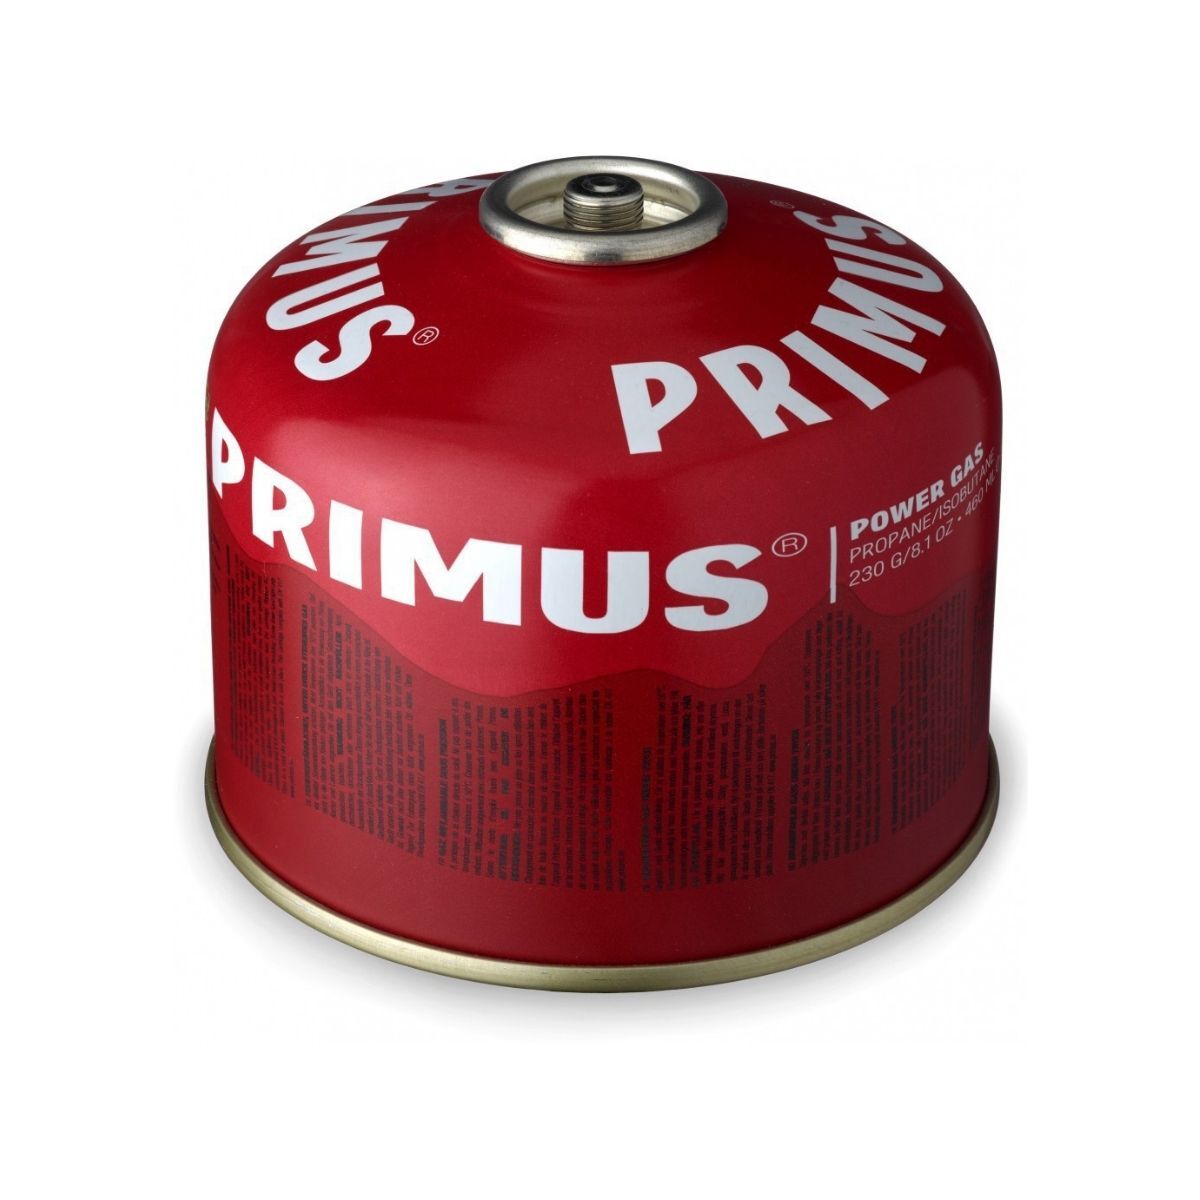 Primus Power Gas 230 g L1 - Cartucho de gas